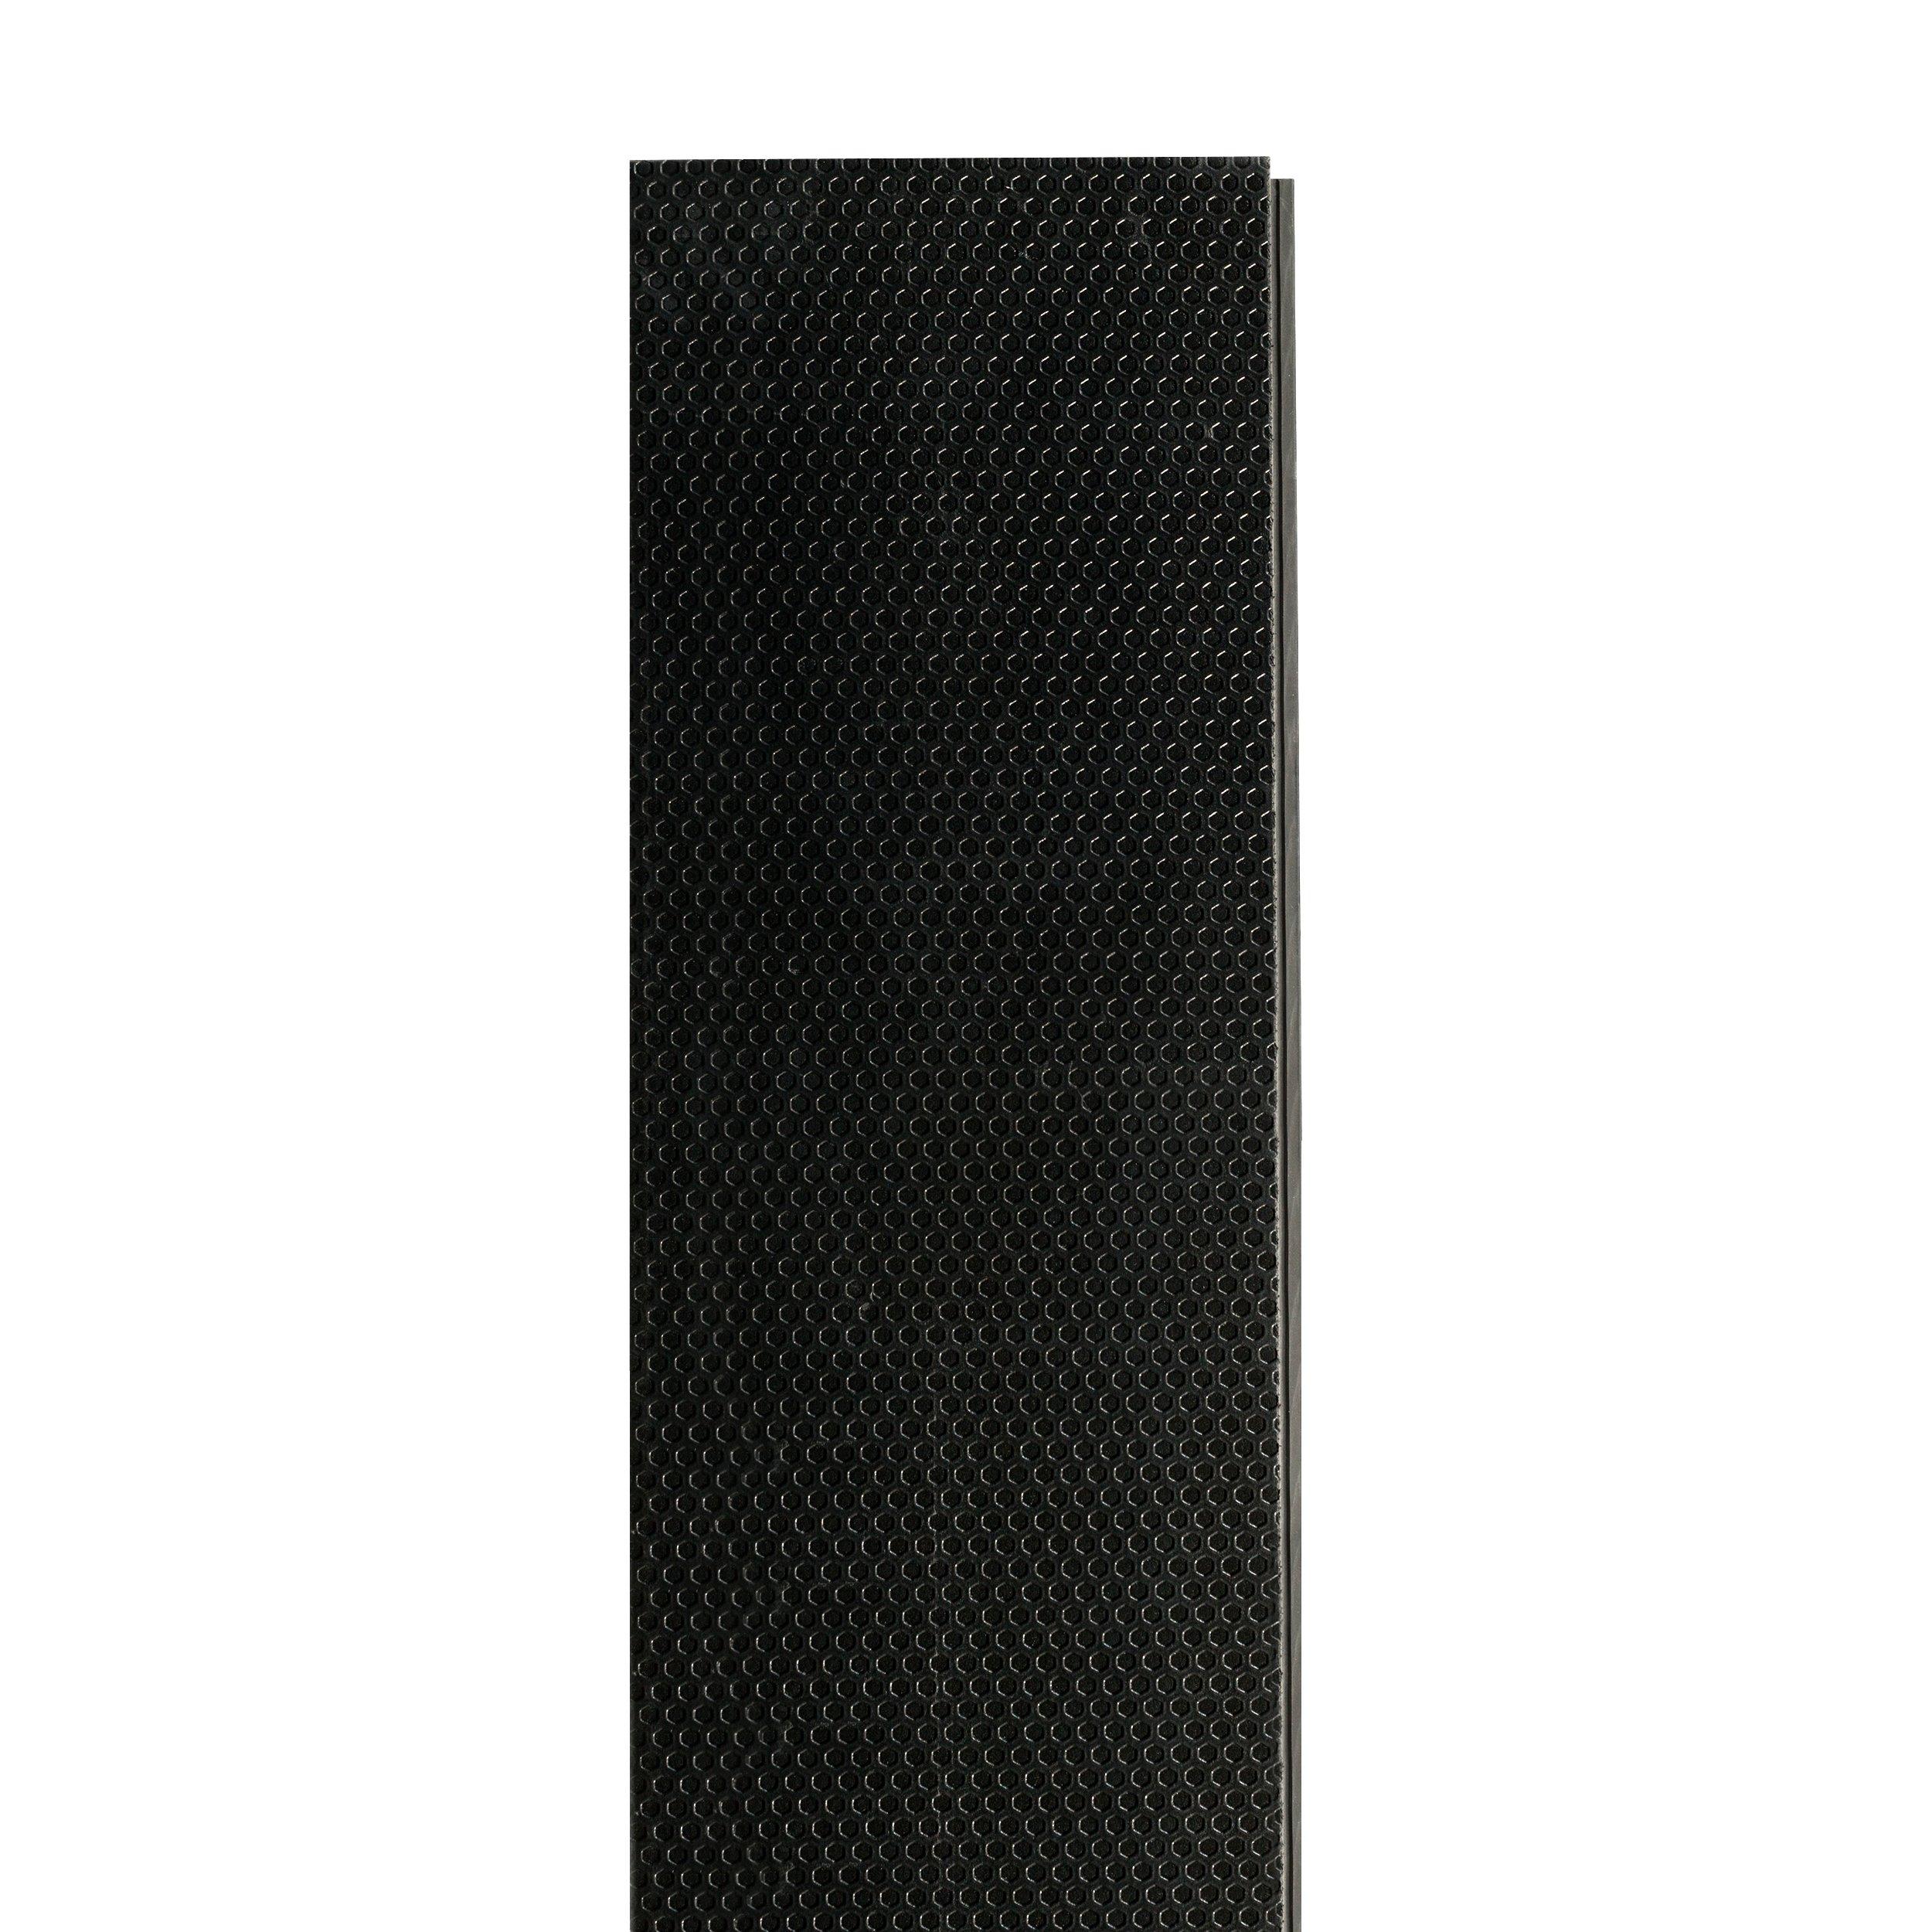 Sedona Canyon Rigid Core Luxury Vinyl Plank - Foam Back